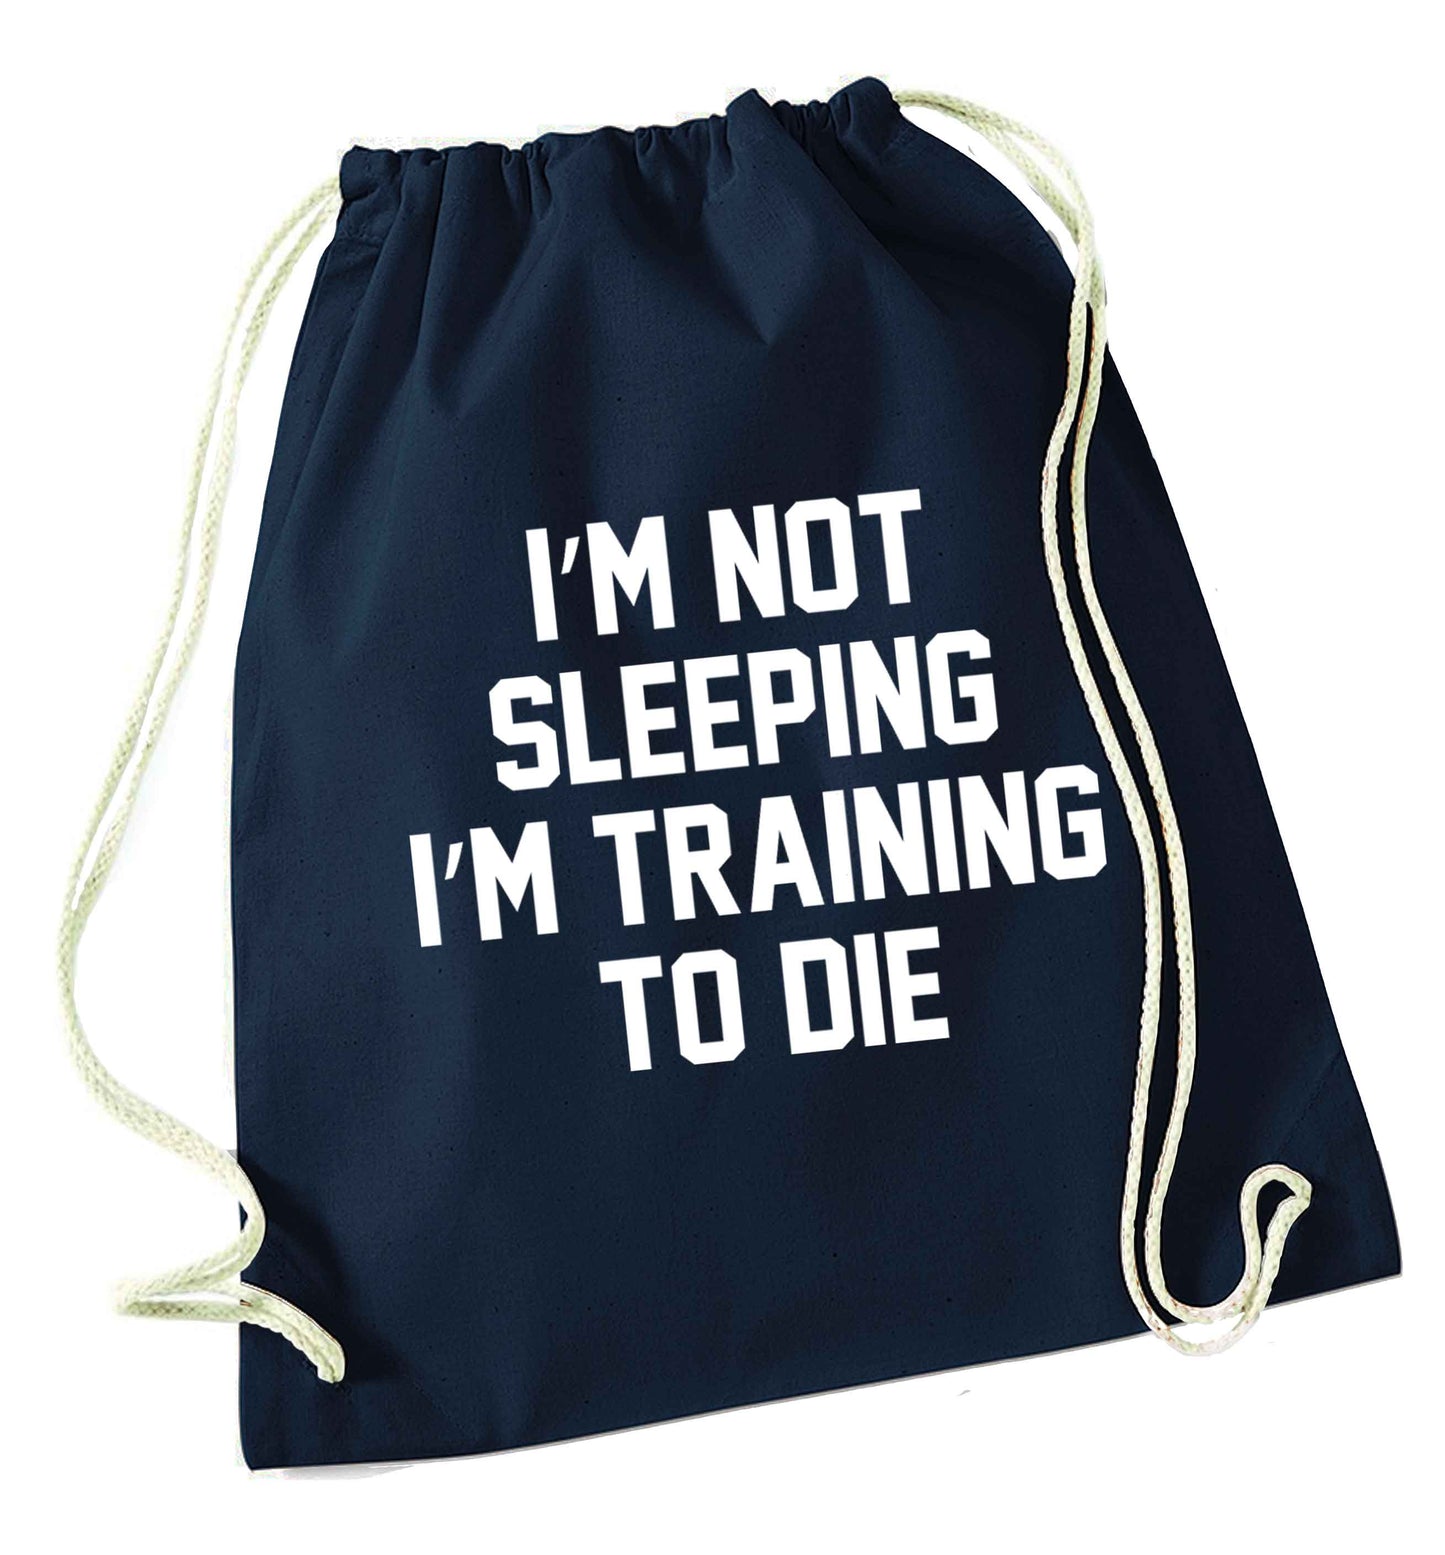 I'm not sleeping I'm training to die navy drawstring bag